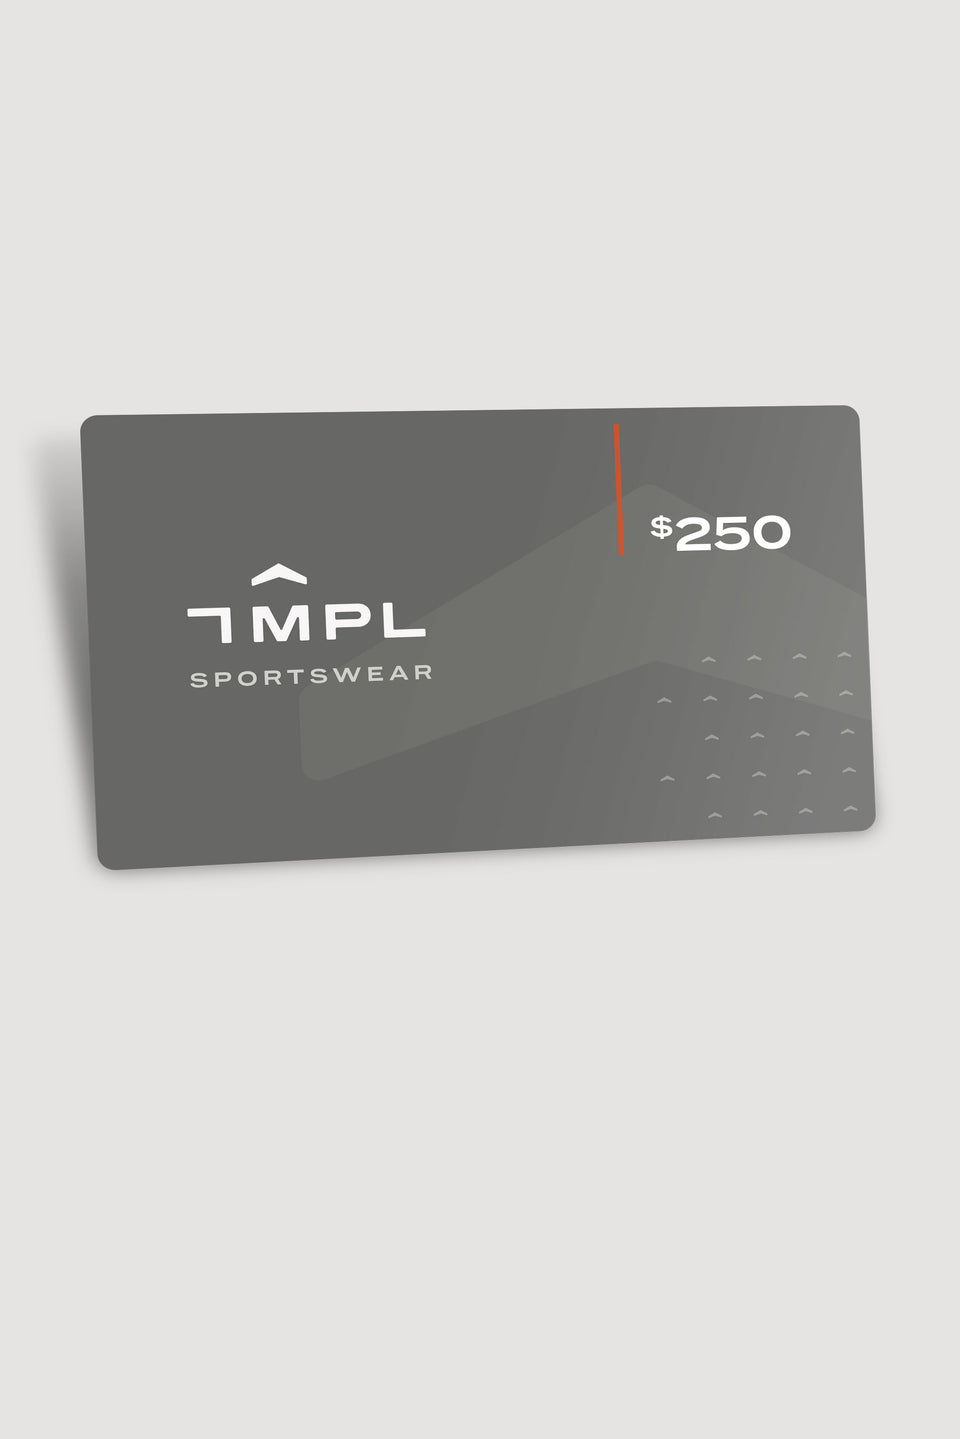 TMPL eGift Card